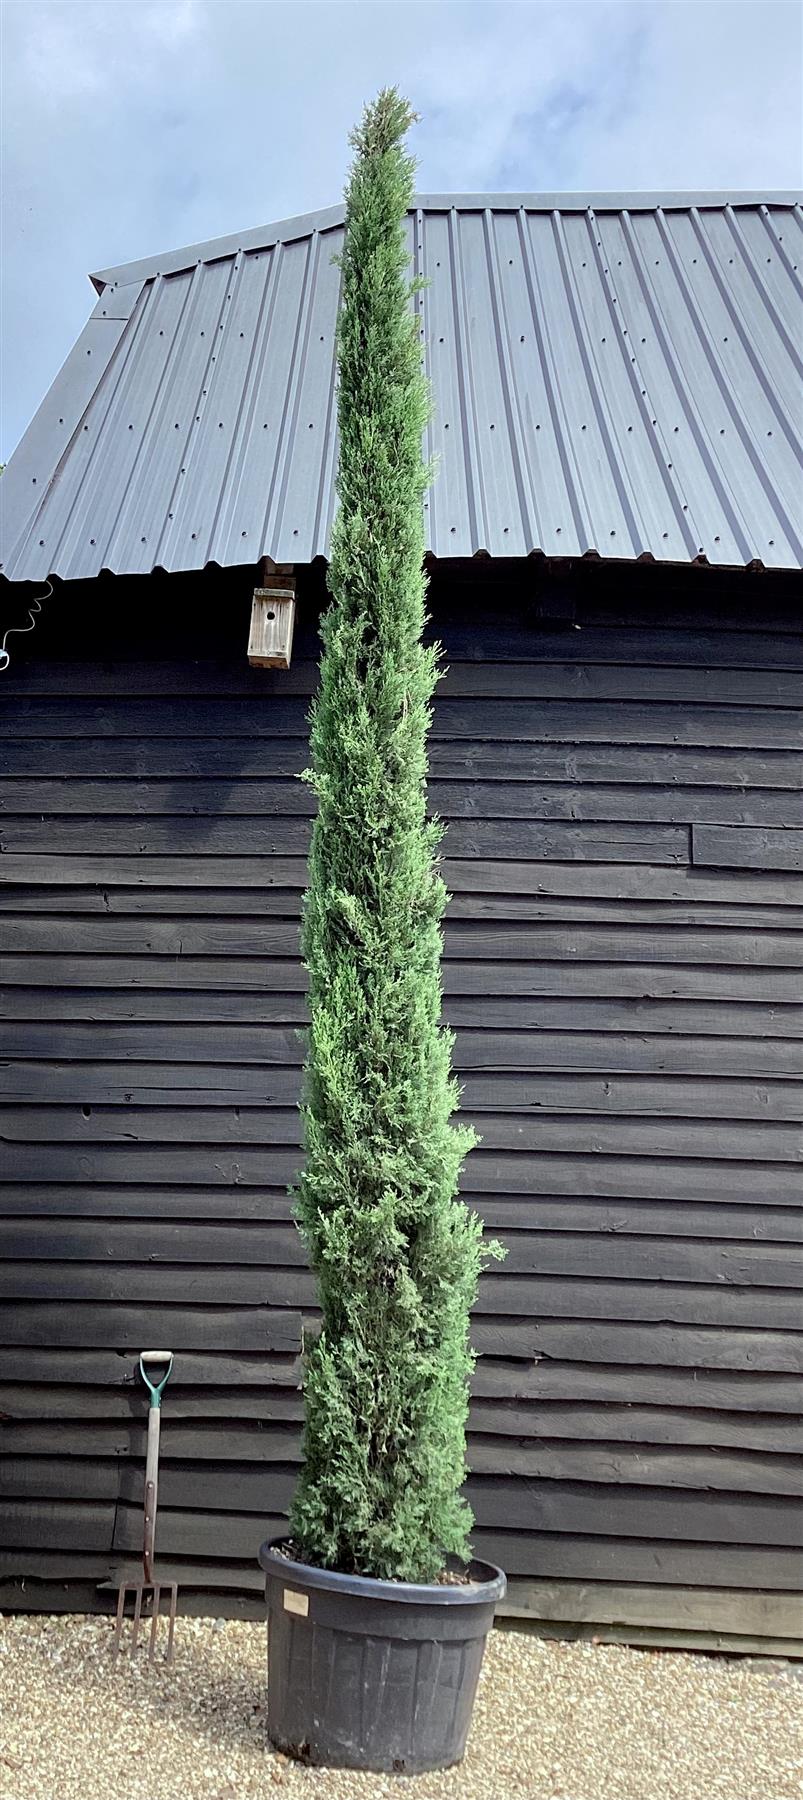 Cupressus sempervirens (Italian Cypress) - 550/580cm, 150lt